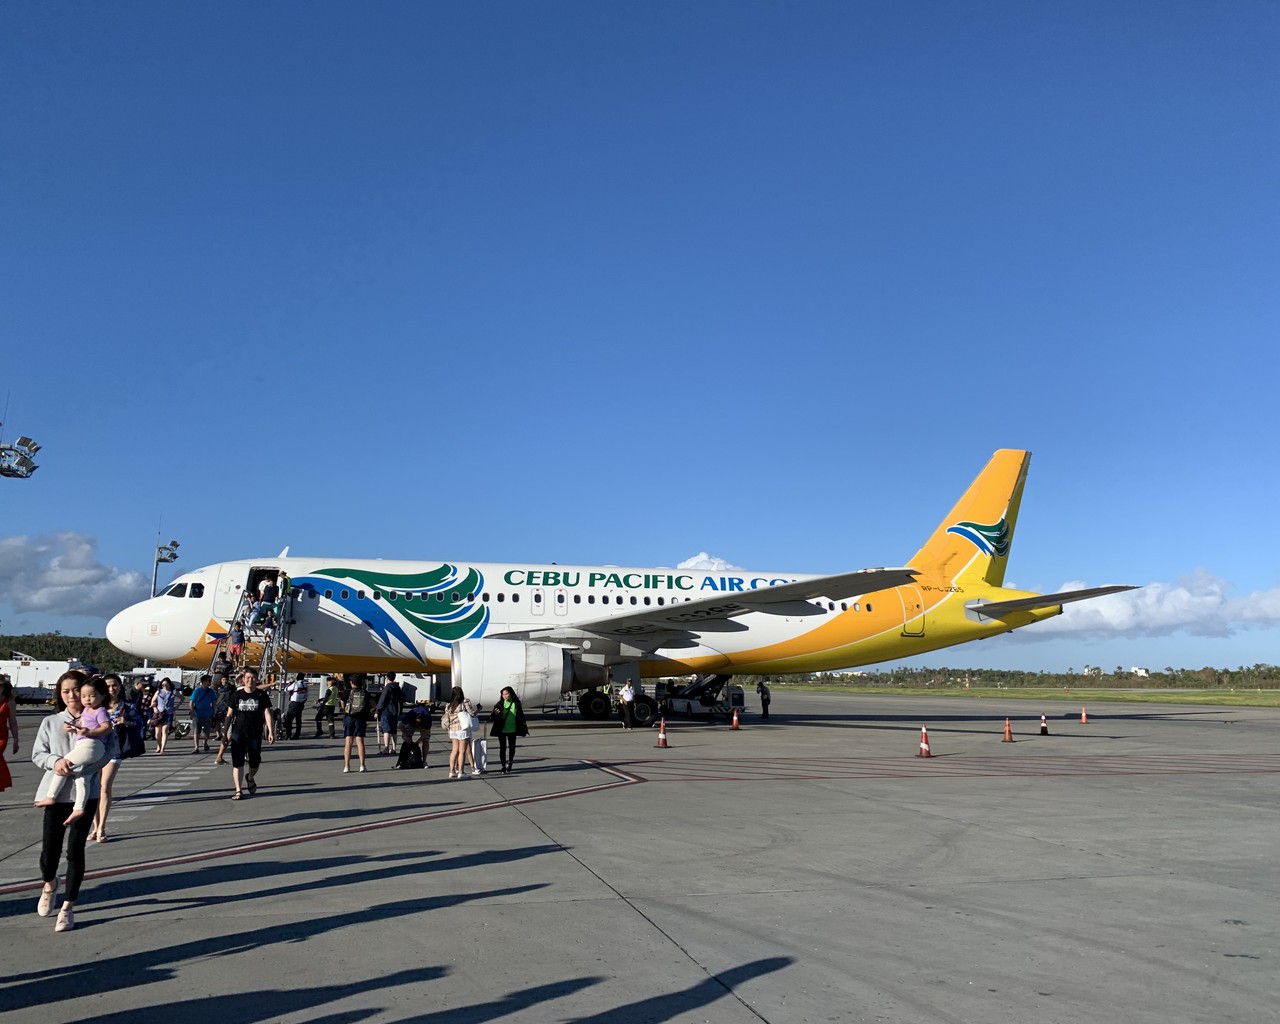 Review of Cebu Pacific flight from Manila to Caticlan (Boracay) in Economy